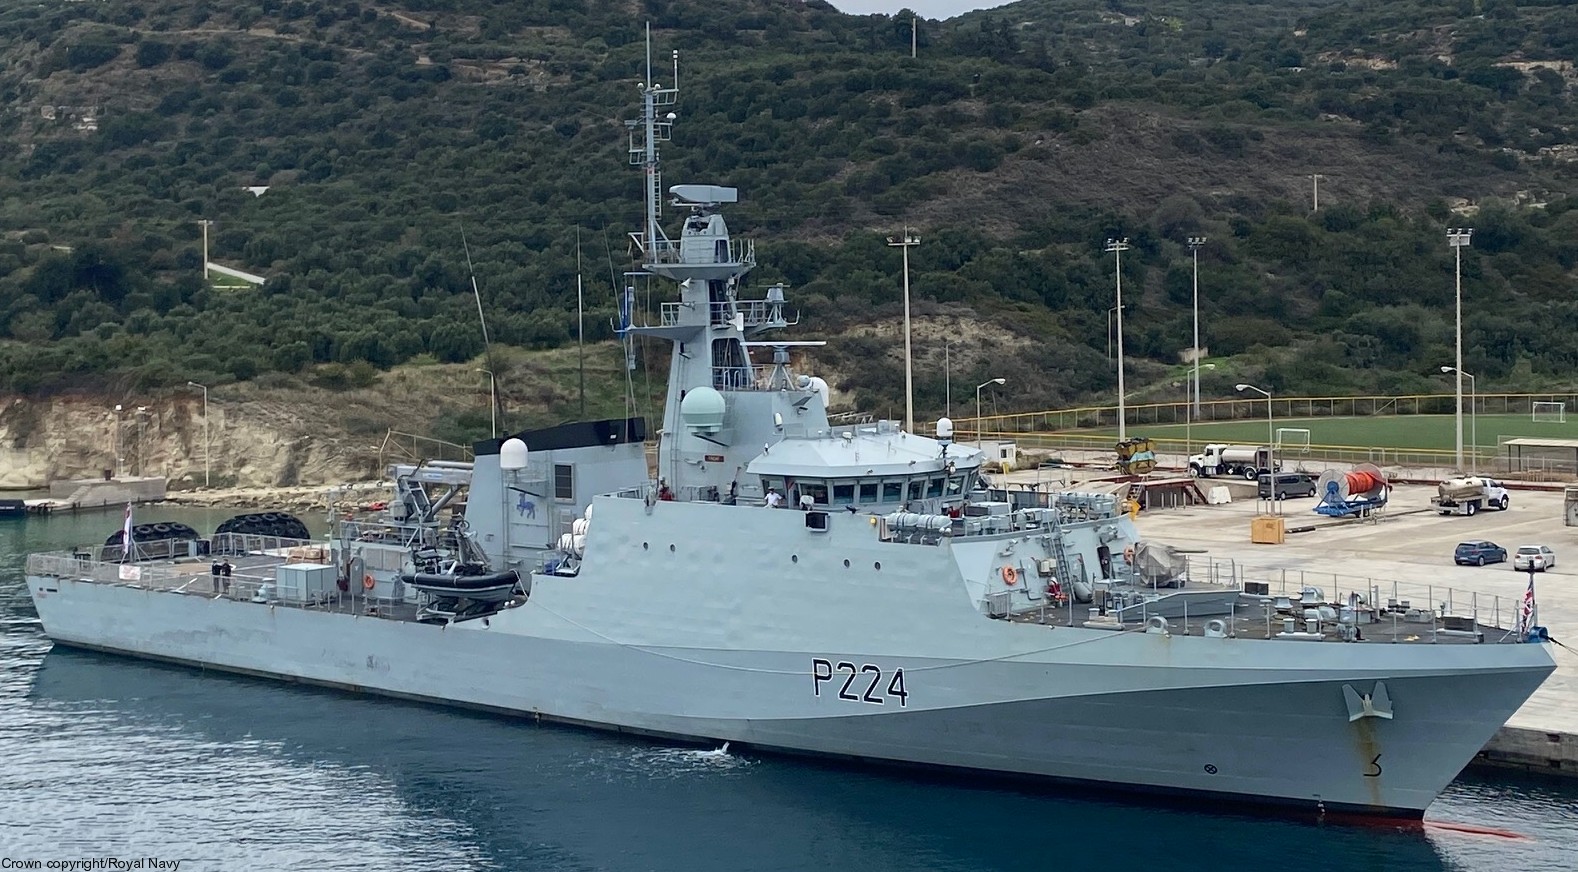 p-224 hms trent river class offshore patrol vessel opv royal navy 12